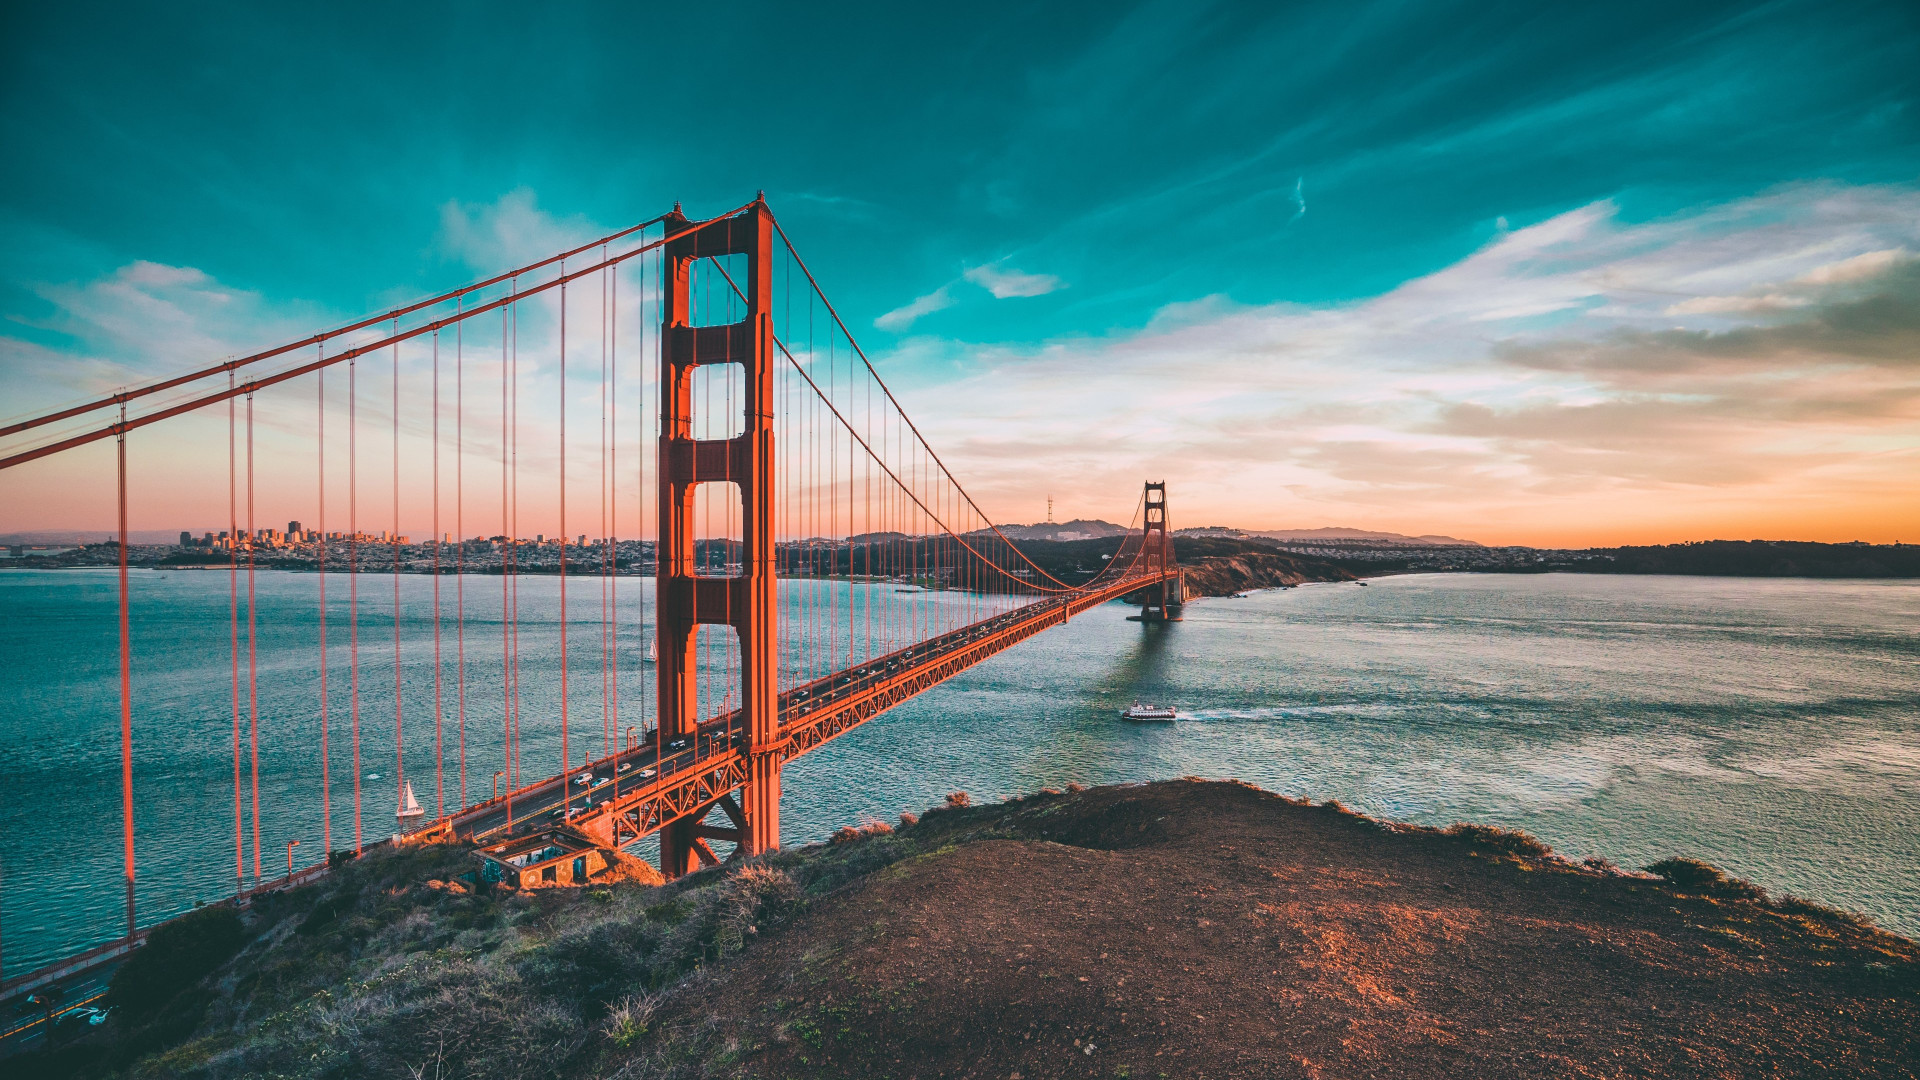 Download wallpaper: Golden Gate Bridge 1920x1080